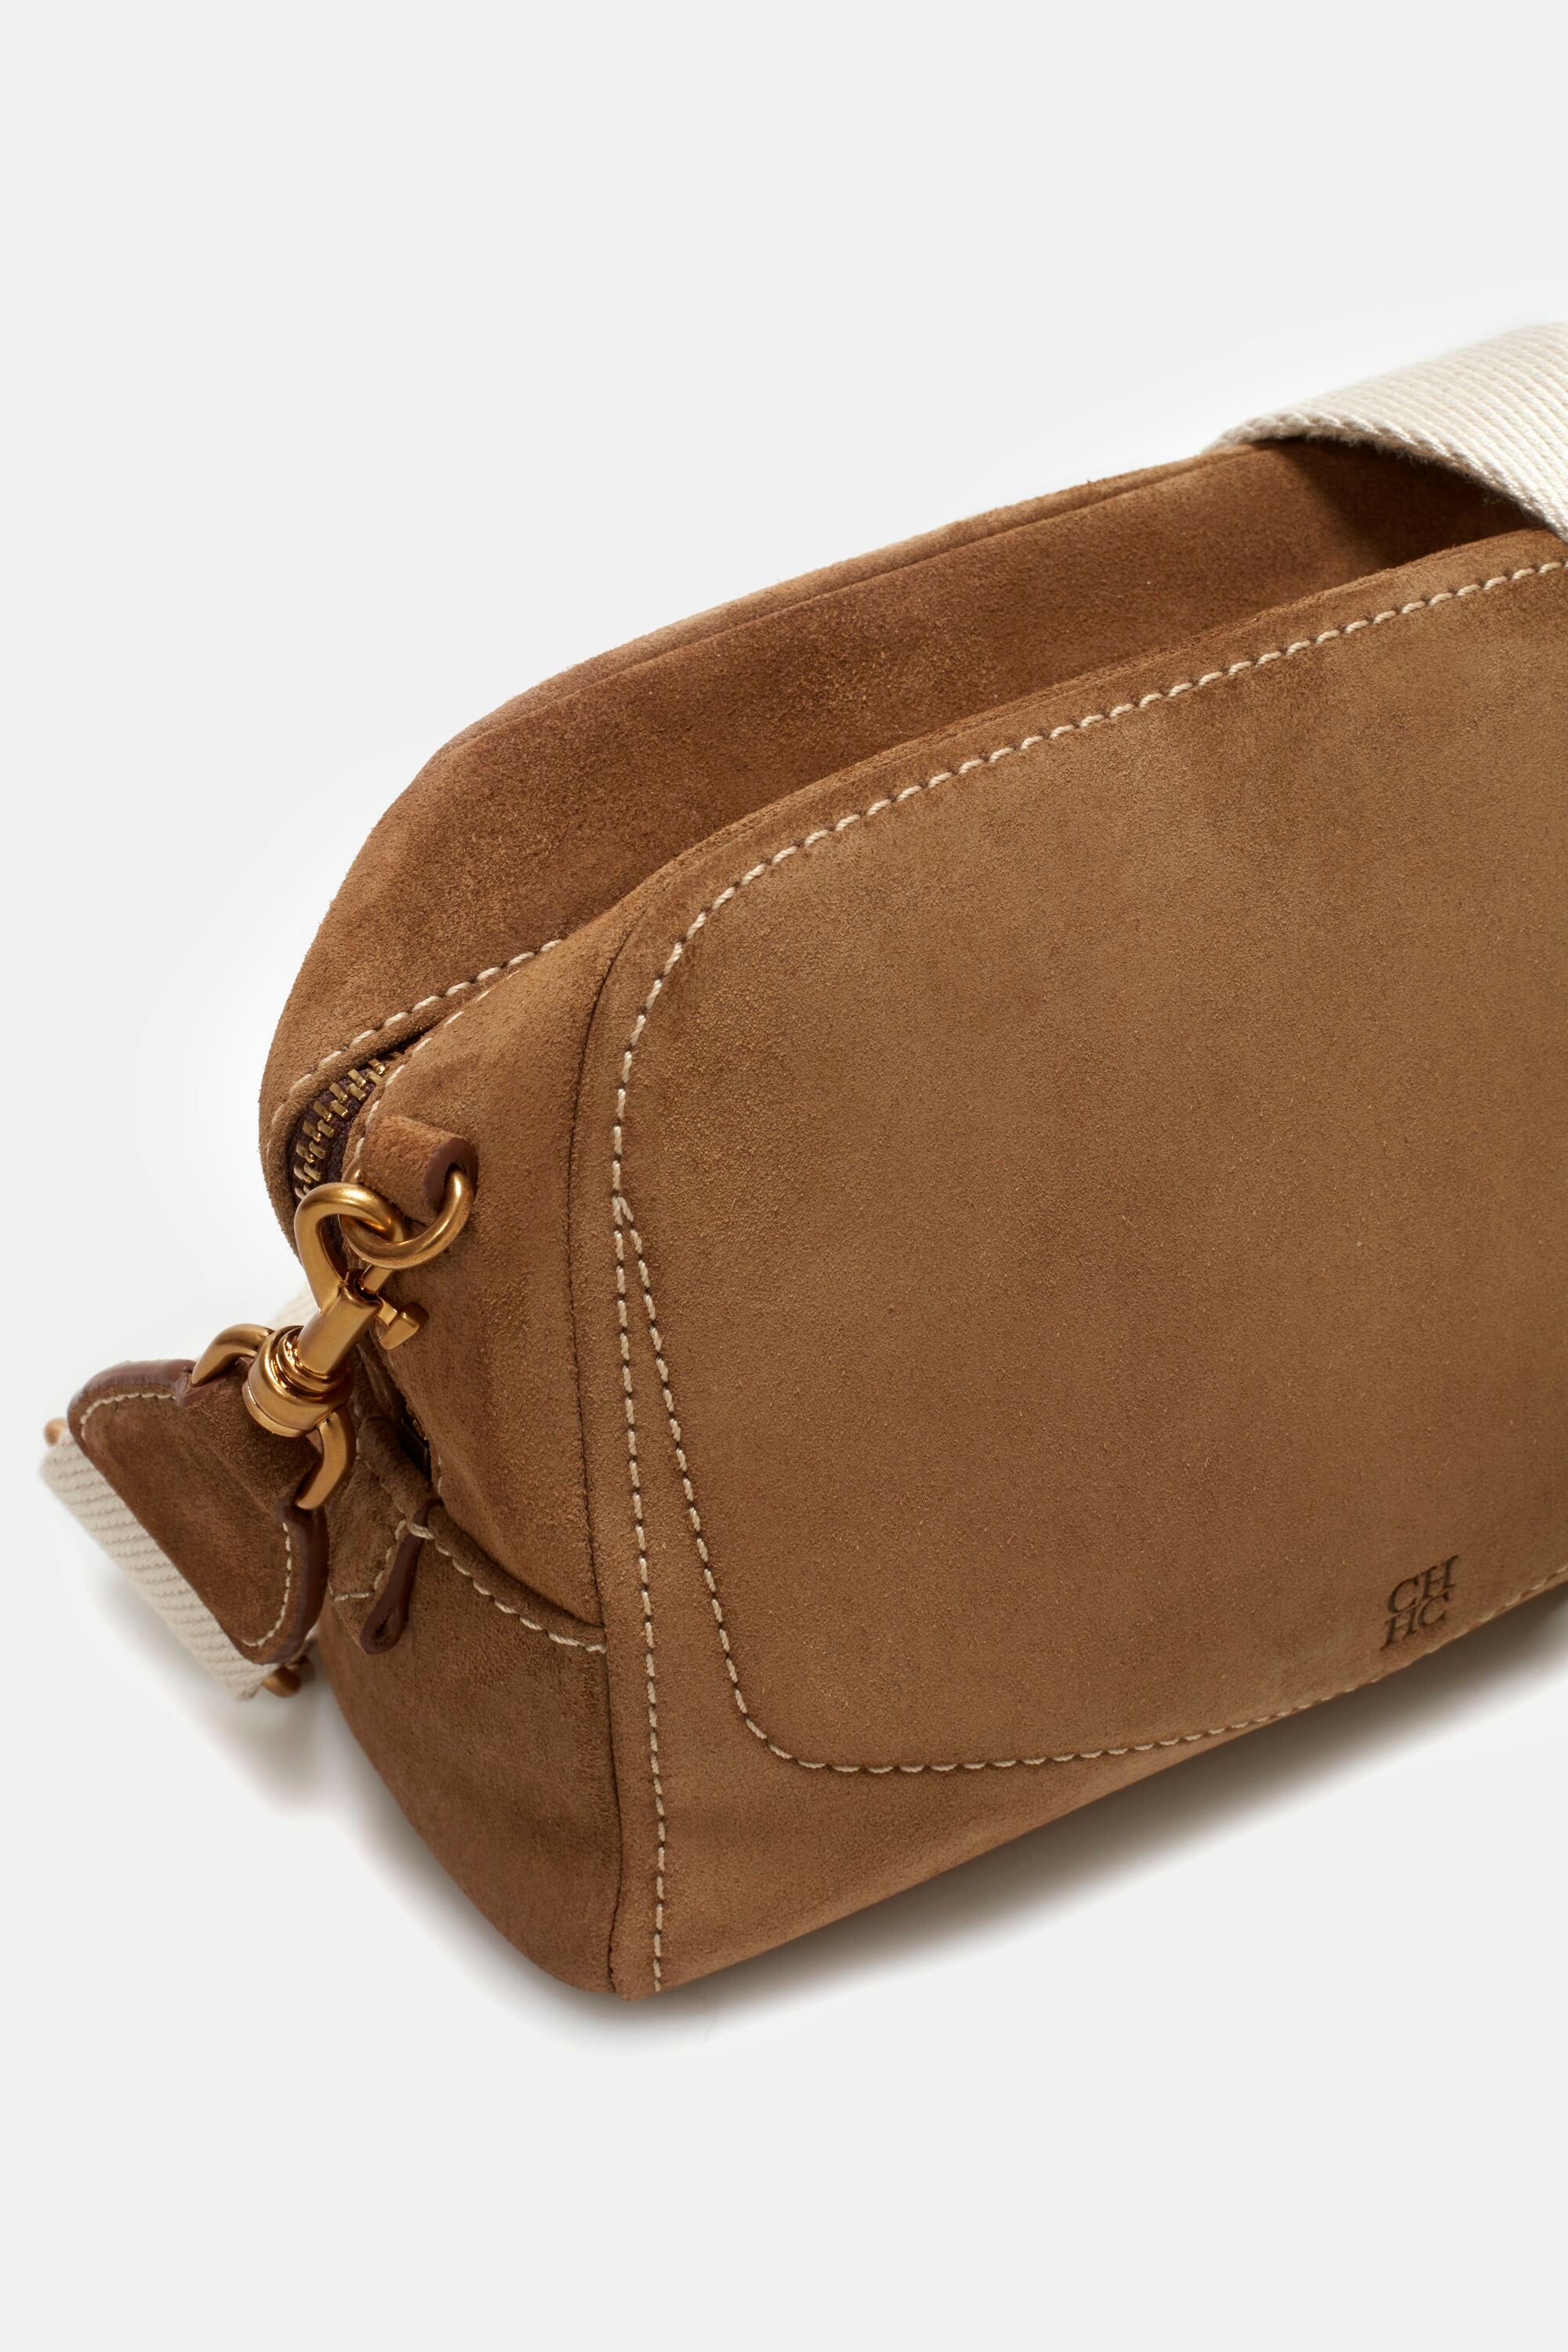  Oak Leathers Leather Crossbody Handbag For Ladies